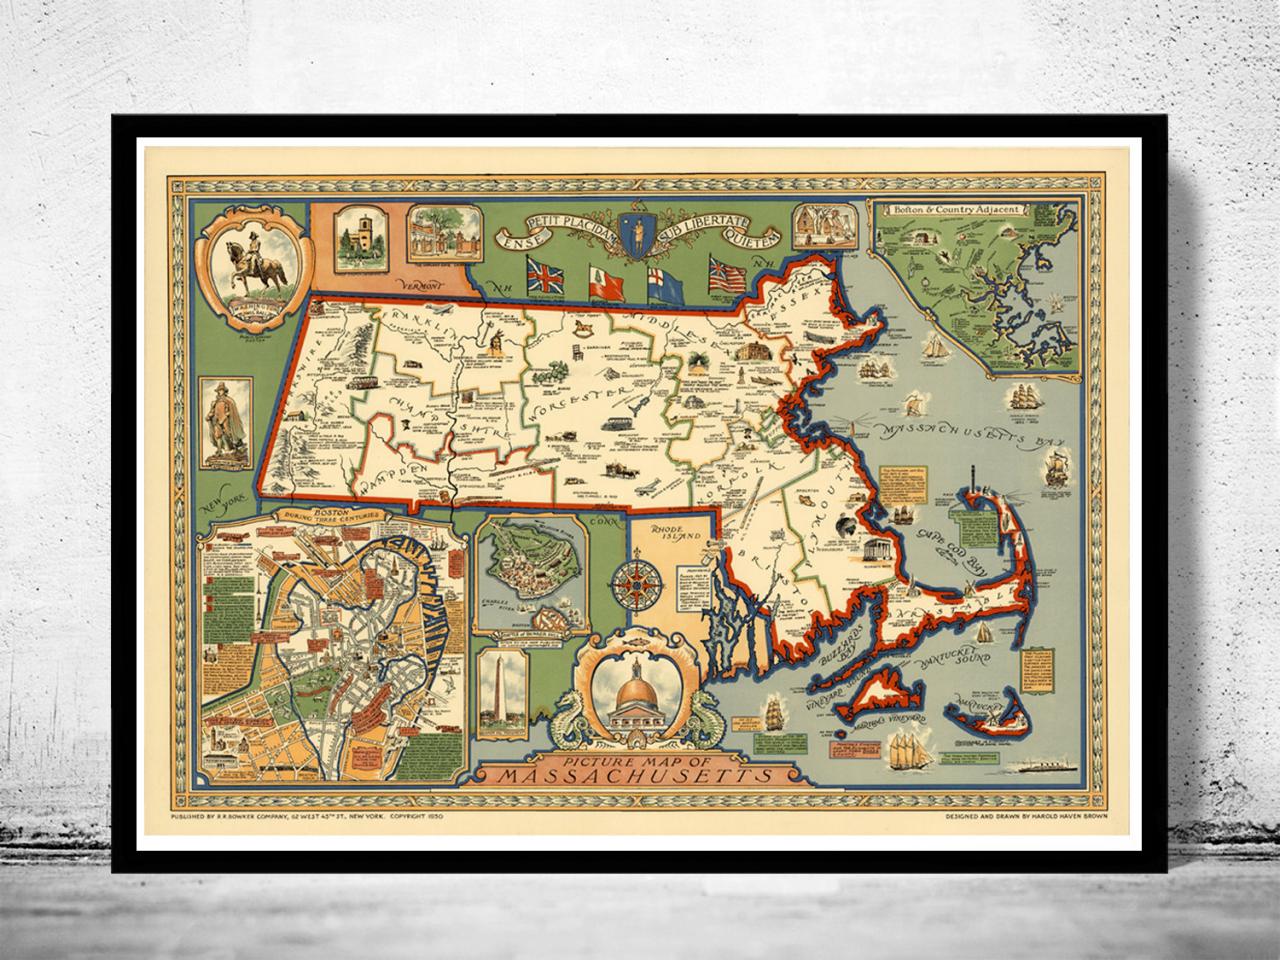 Old Map Of Massachusetts 1935, Boston, Salem, Worcester,lowell, Springfield